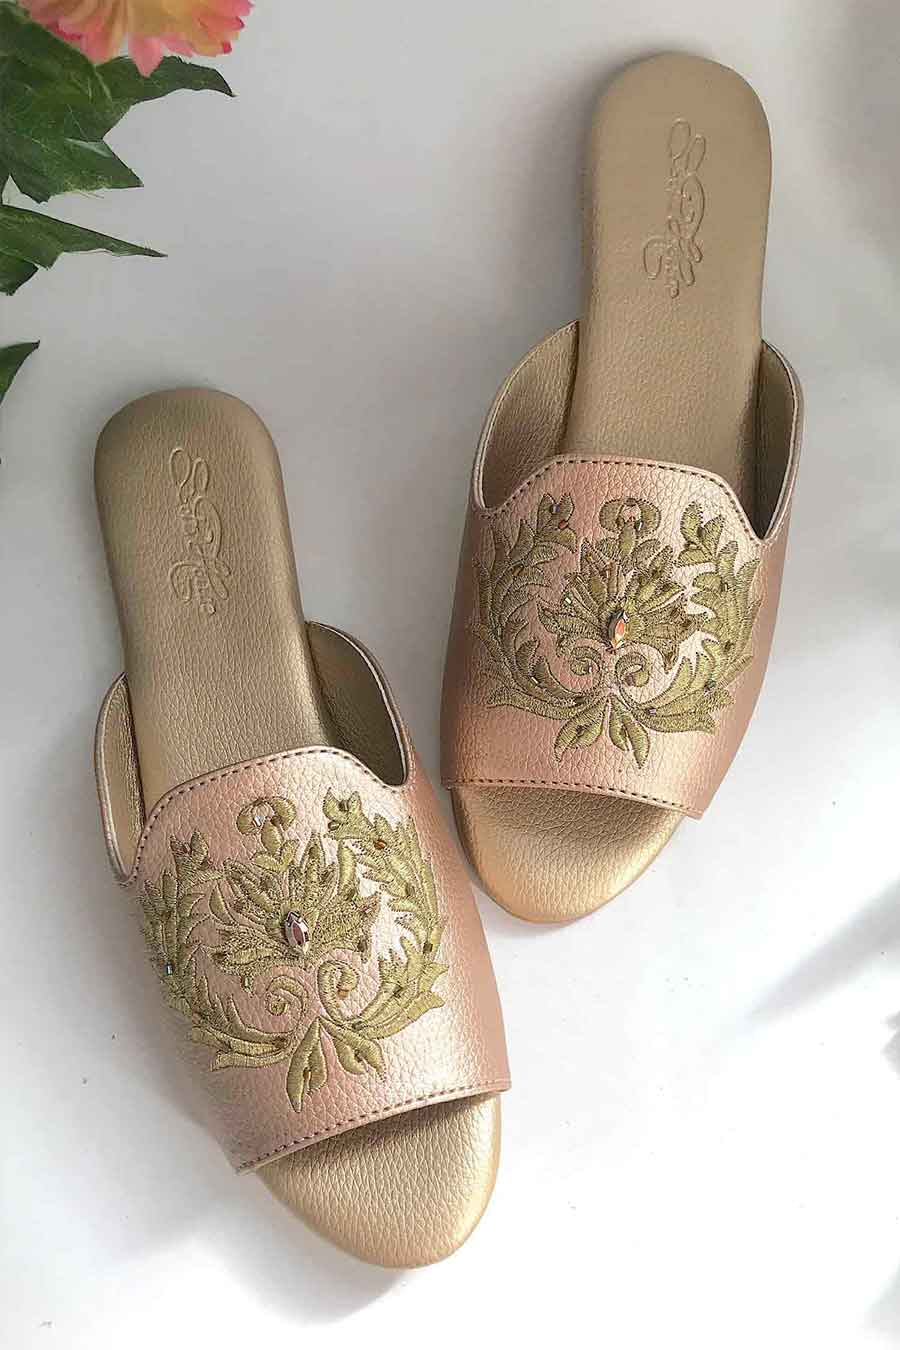 Damask Rose Gold Loafers